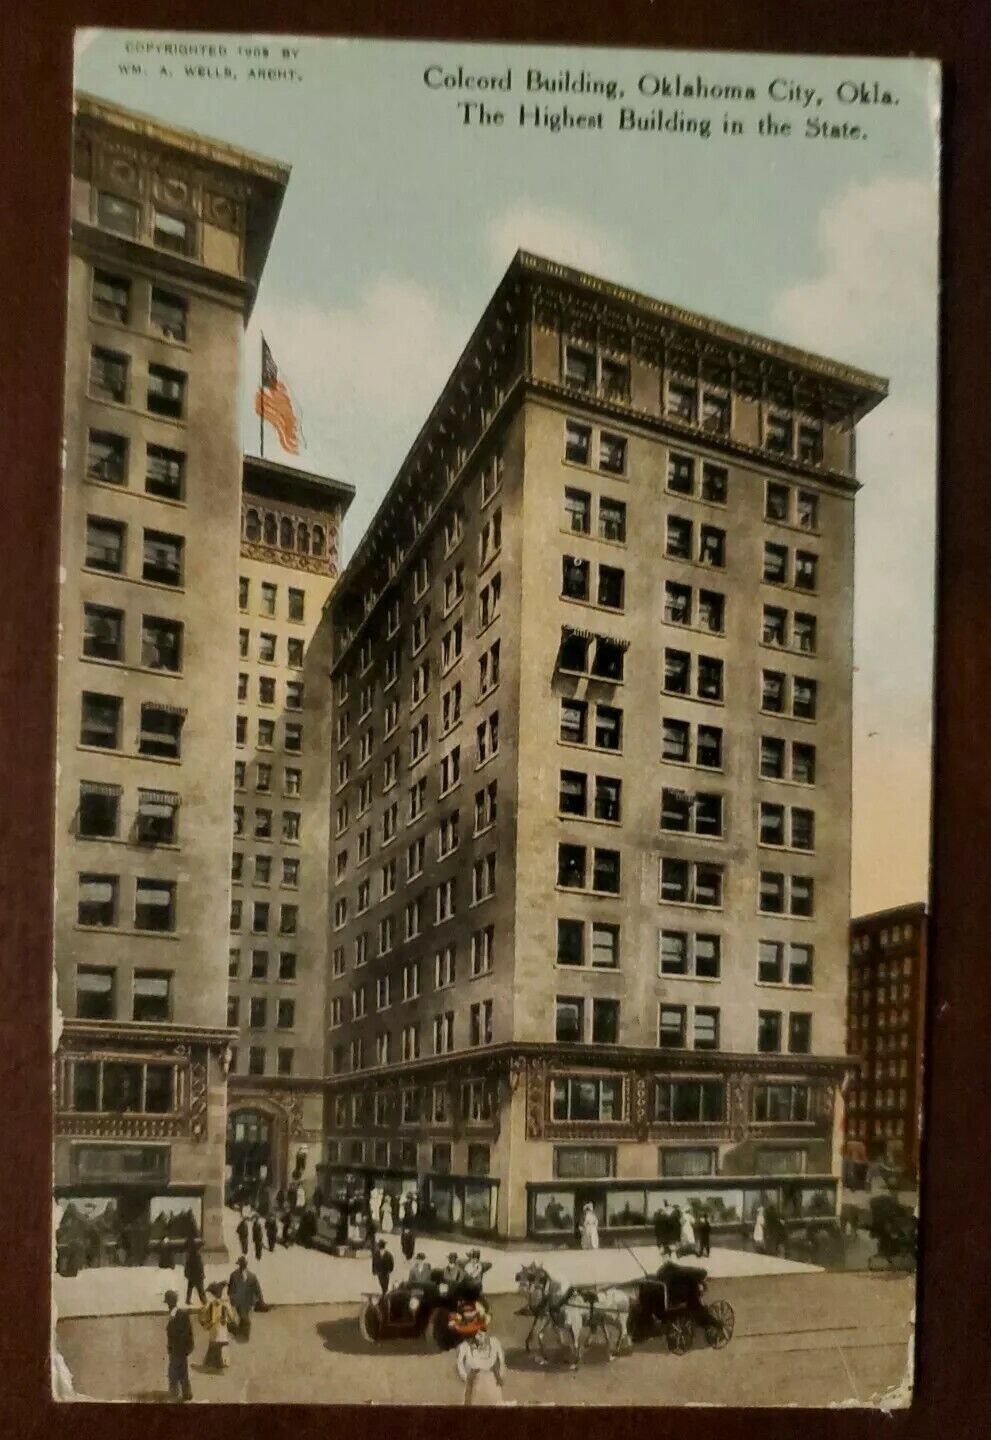 Colcord Building (hotel) Oklahoma City 1910 Vintage Postcard - highest building 